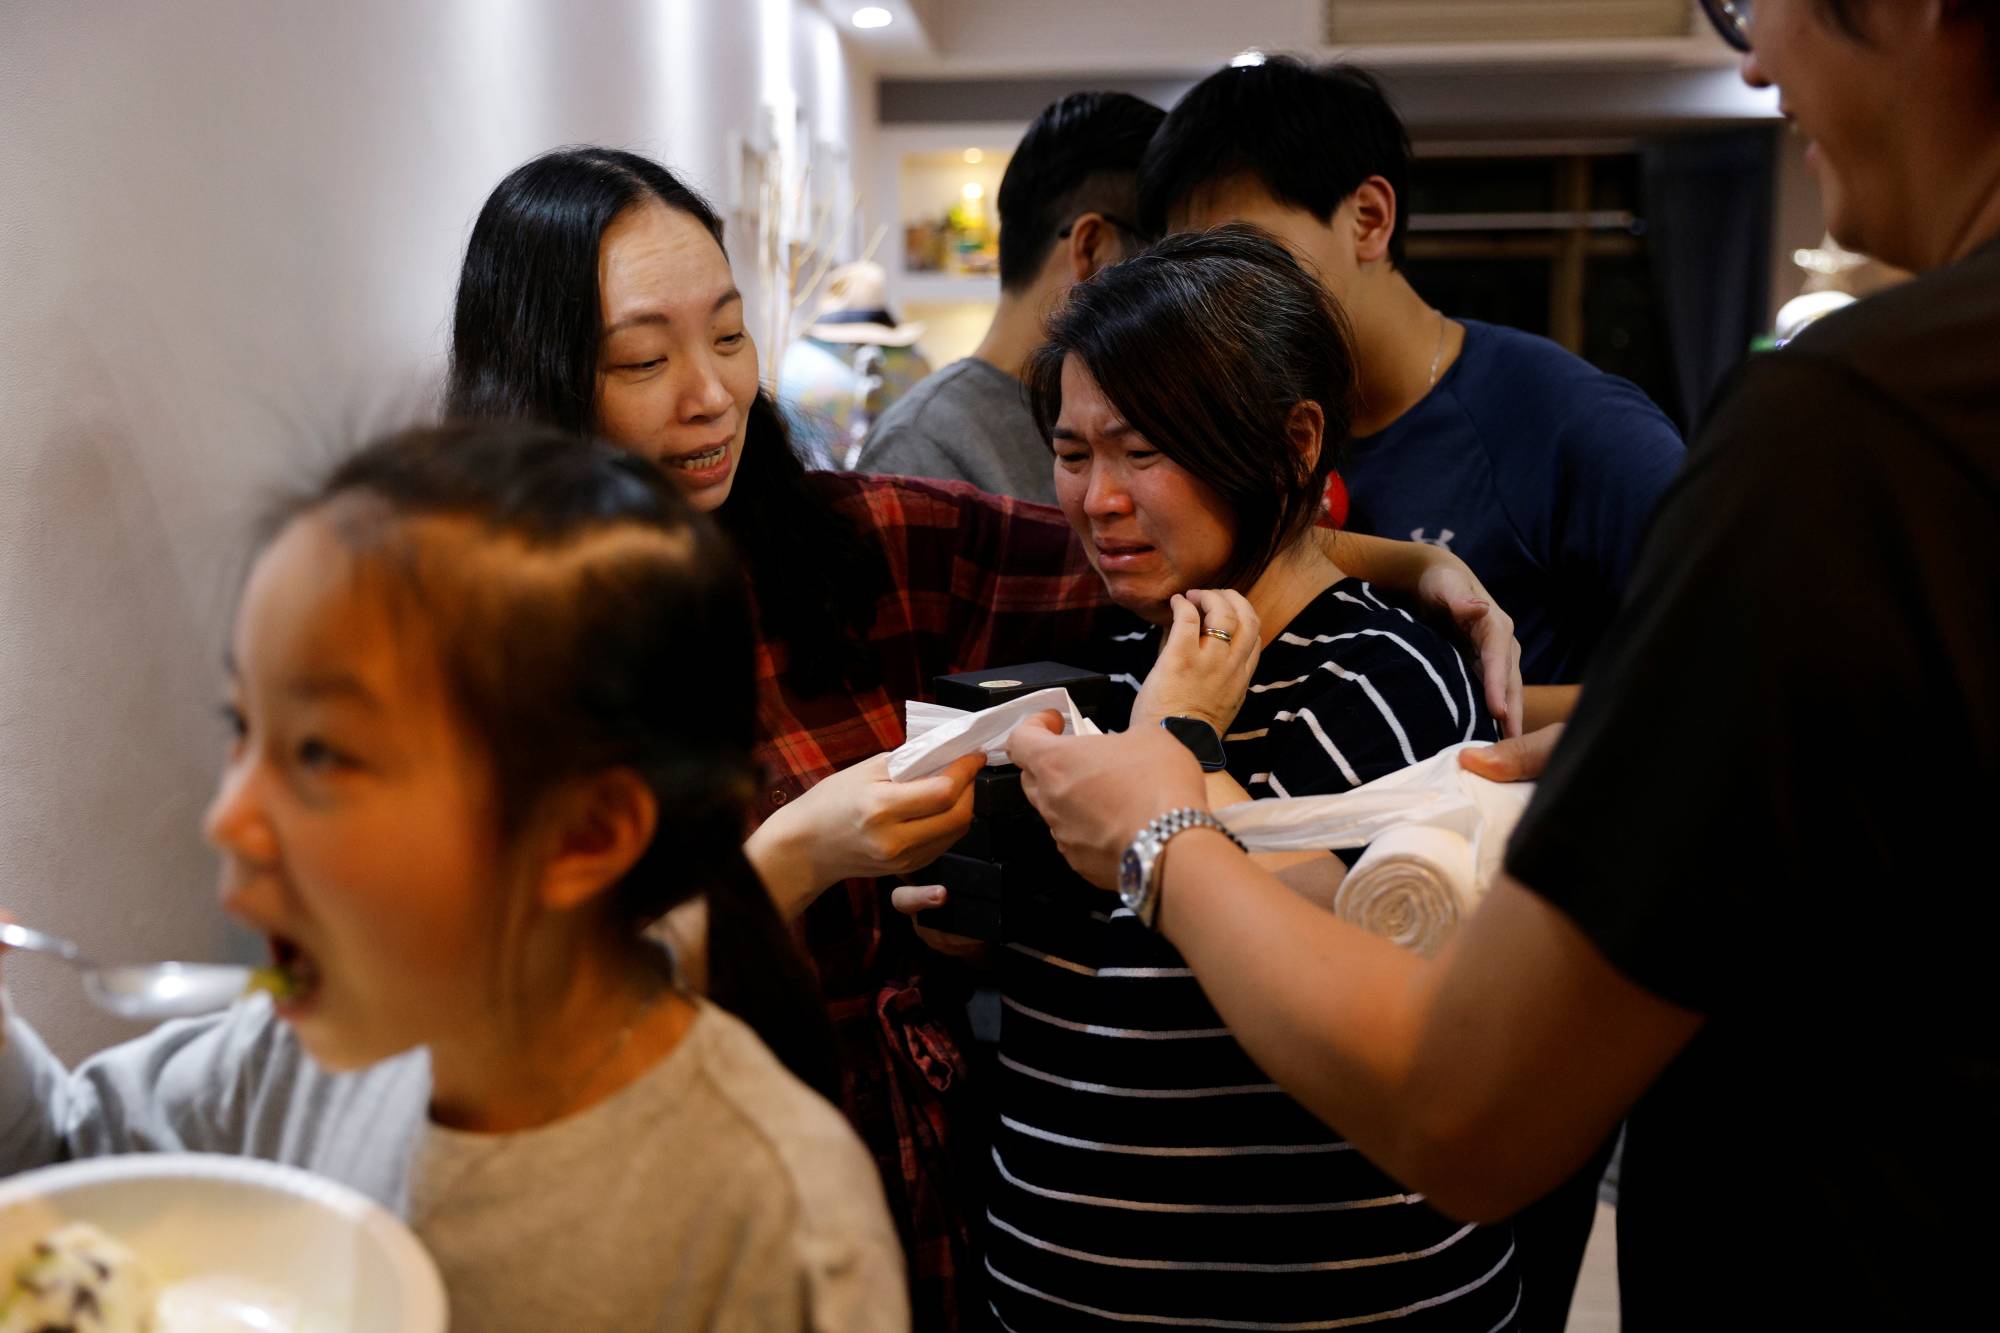 REUTERSLeaving Hong Kong A family makes a